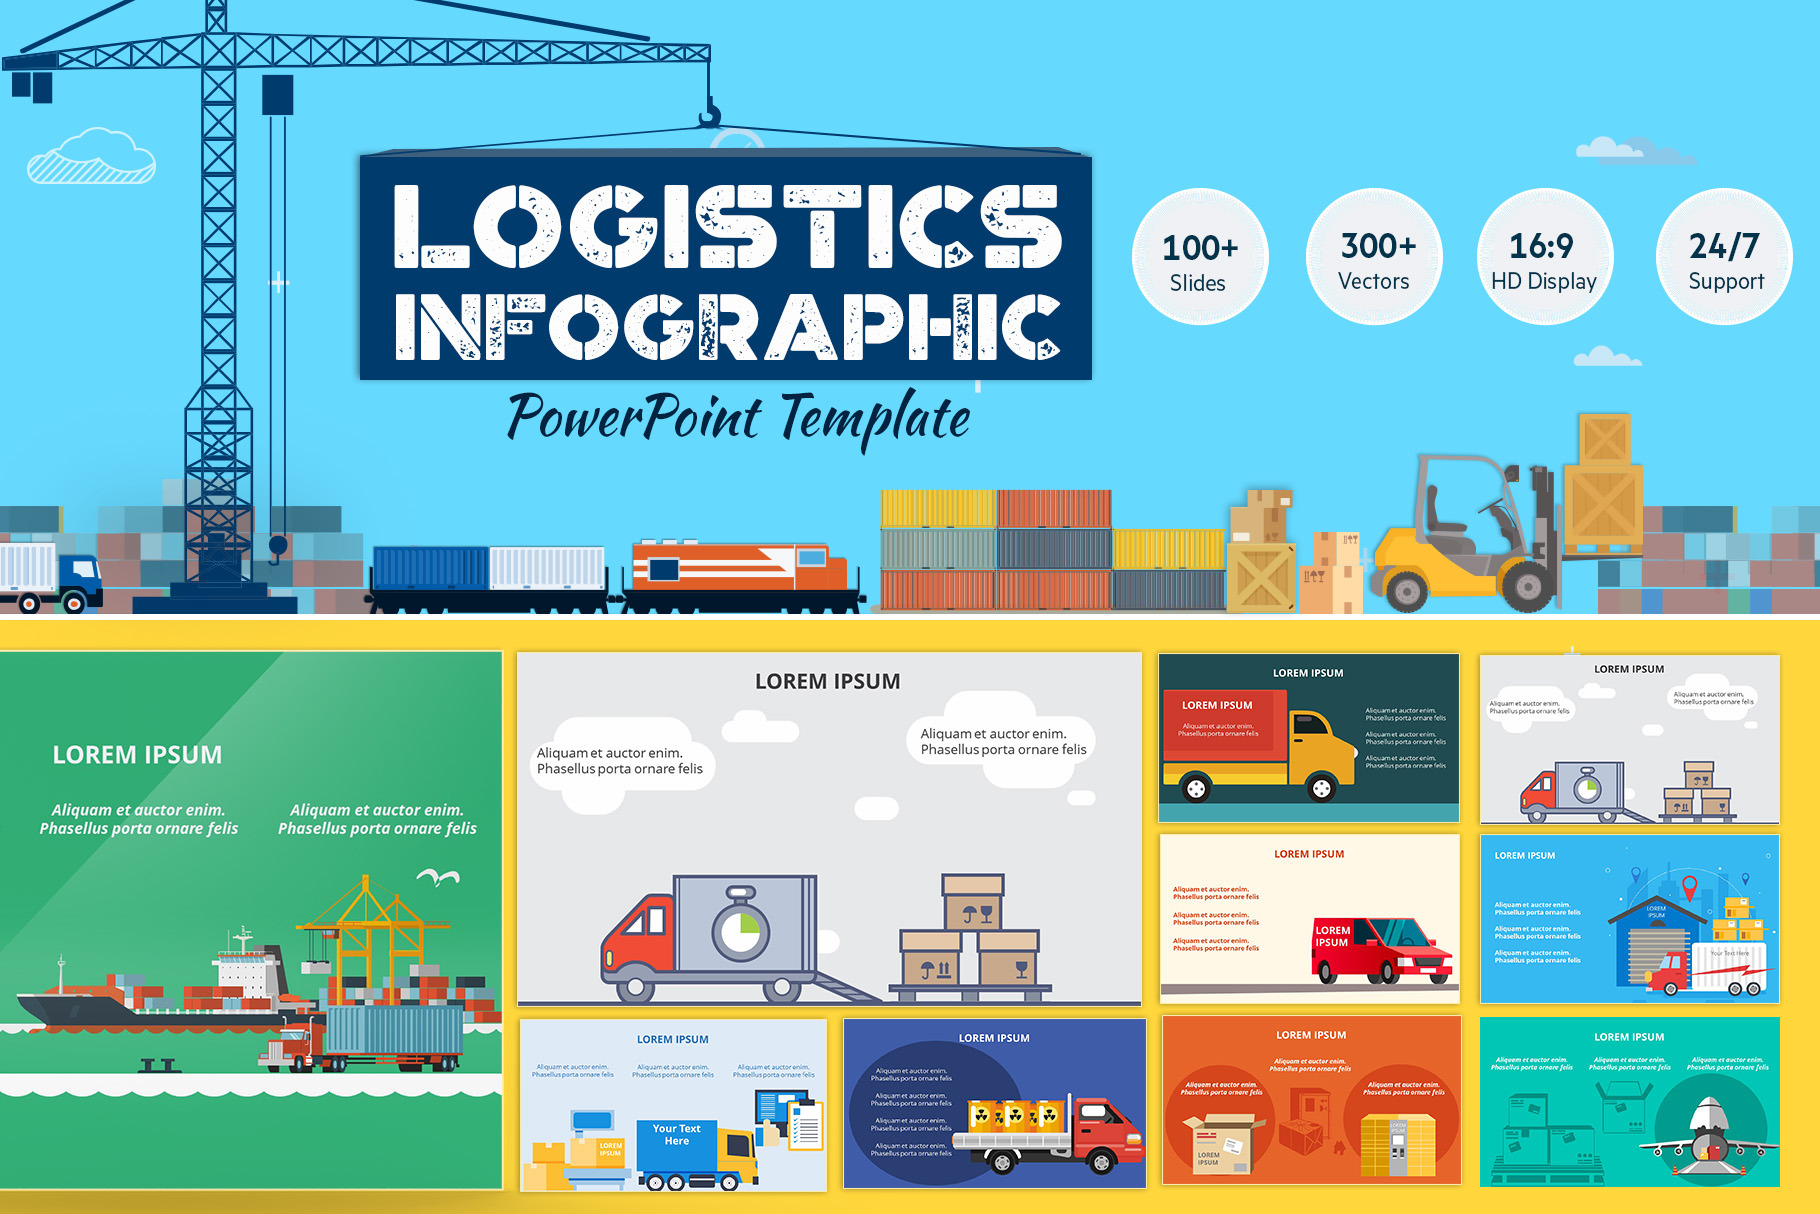 presentation of logistics company